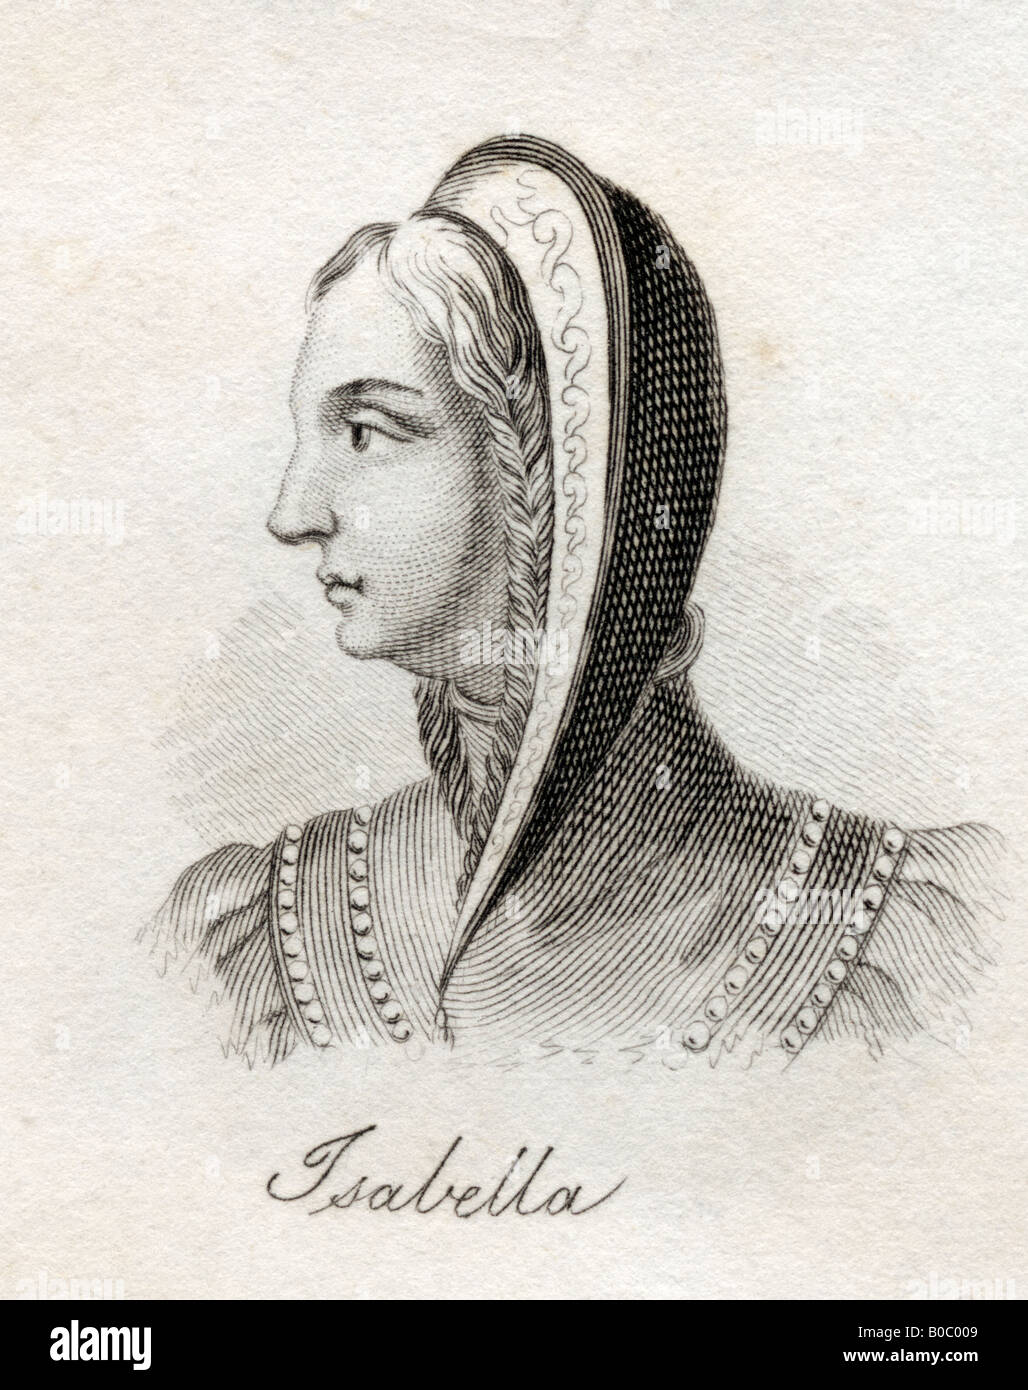 Isabella I, byname Isabella the Catholic, Spanish, Isabel la Catolica,1451 - 1504. Queen of Castile, 1474 - 1504 and of Aragon, 1479 - 1504. Stock Photo